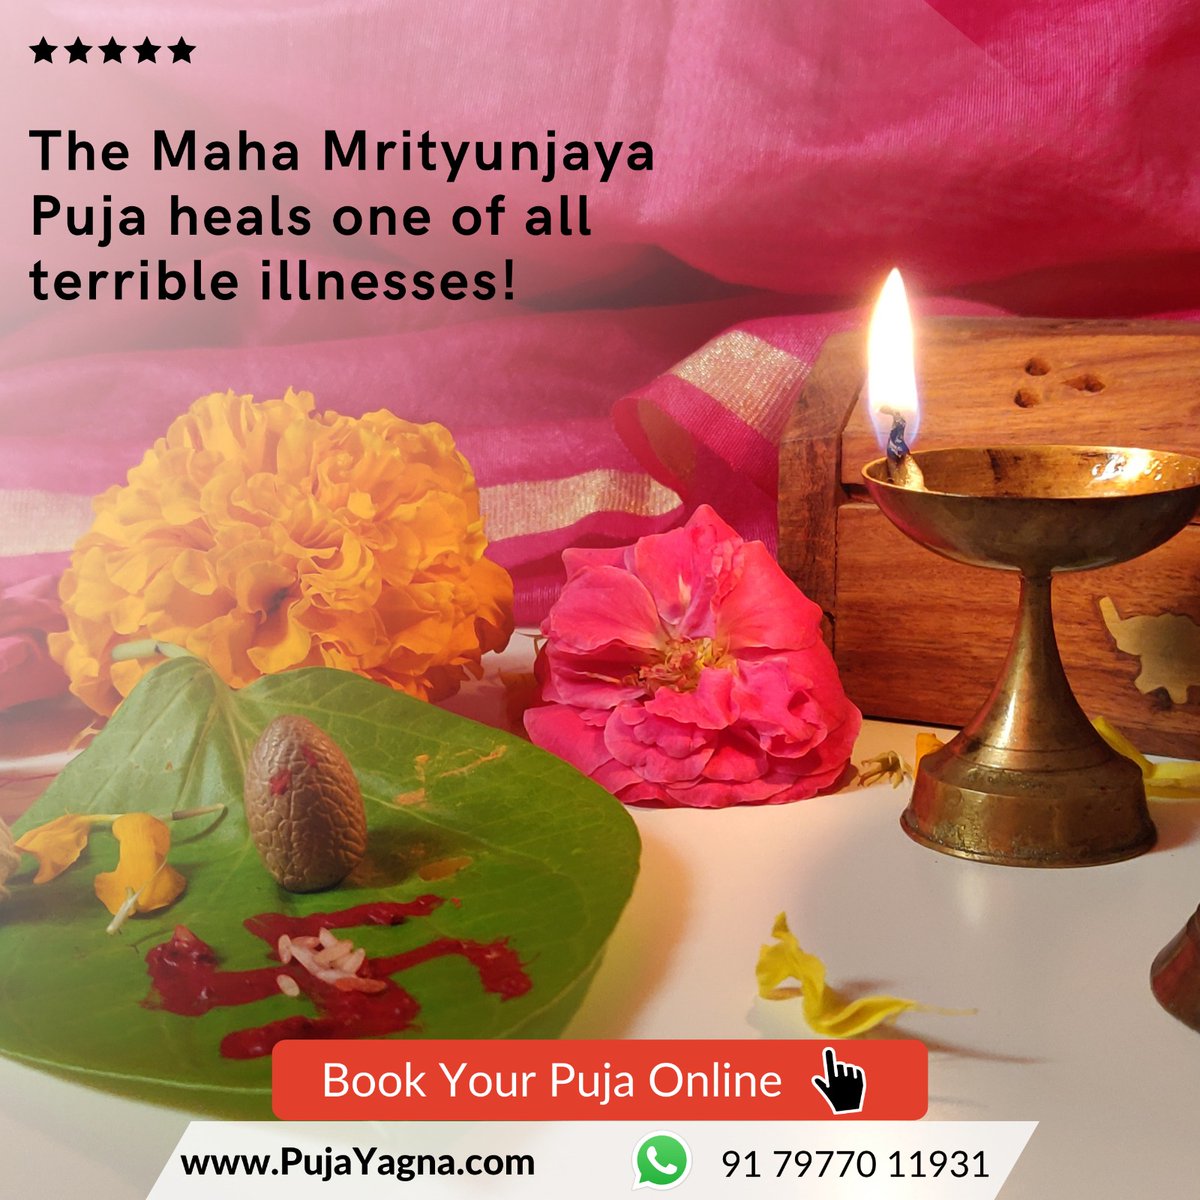 The Maha Mrityunjaya Puja heals one of all terrible illnesses!

To book it online, visit pujayagna.com/products/maham…

#bookforpandit #onlinepoojan #onlinepoojabooking #भक्ति #bhajan #kirtan #vedicchanting #vedicmantra #onlineconcert